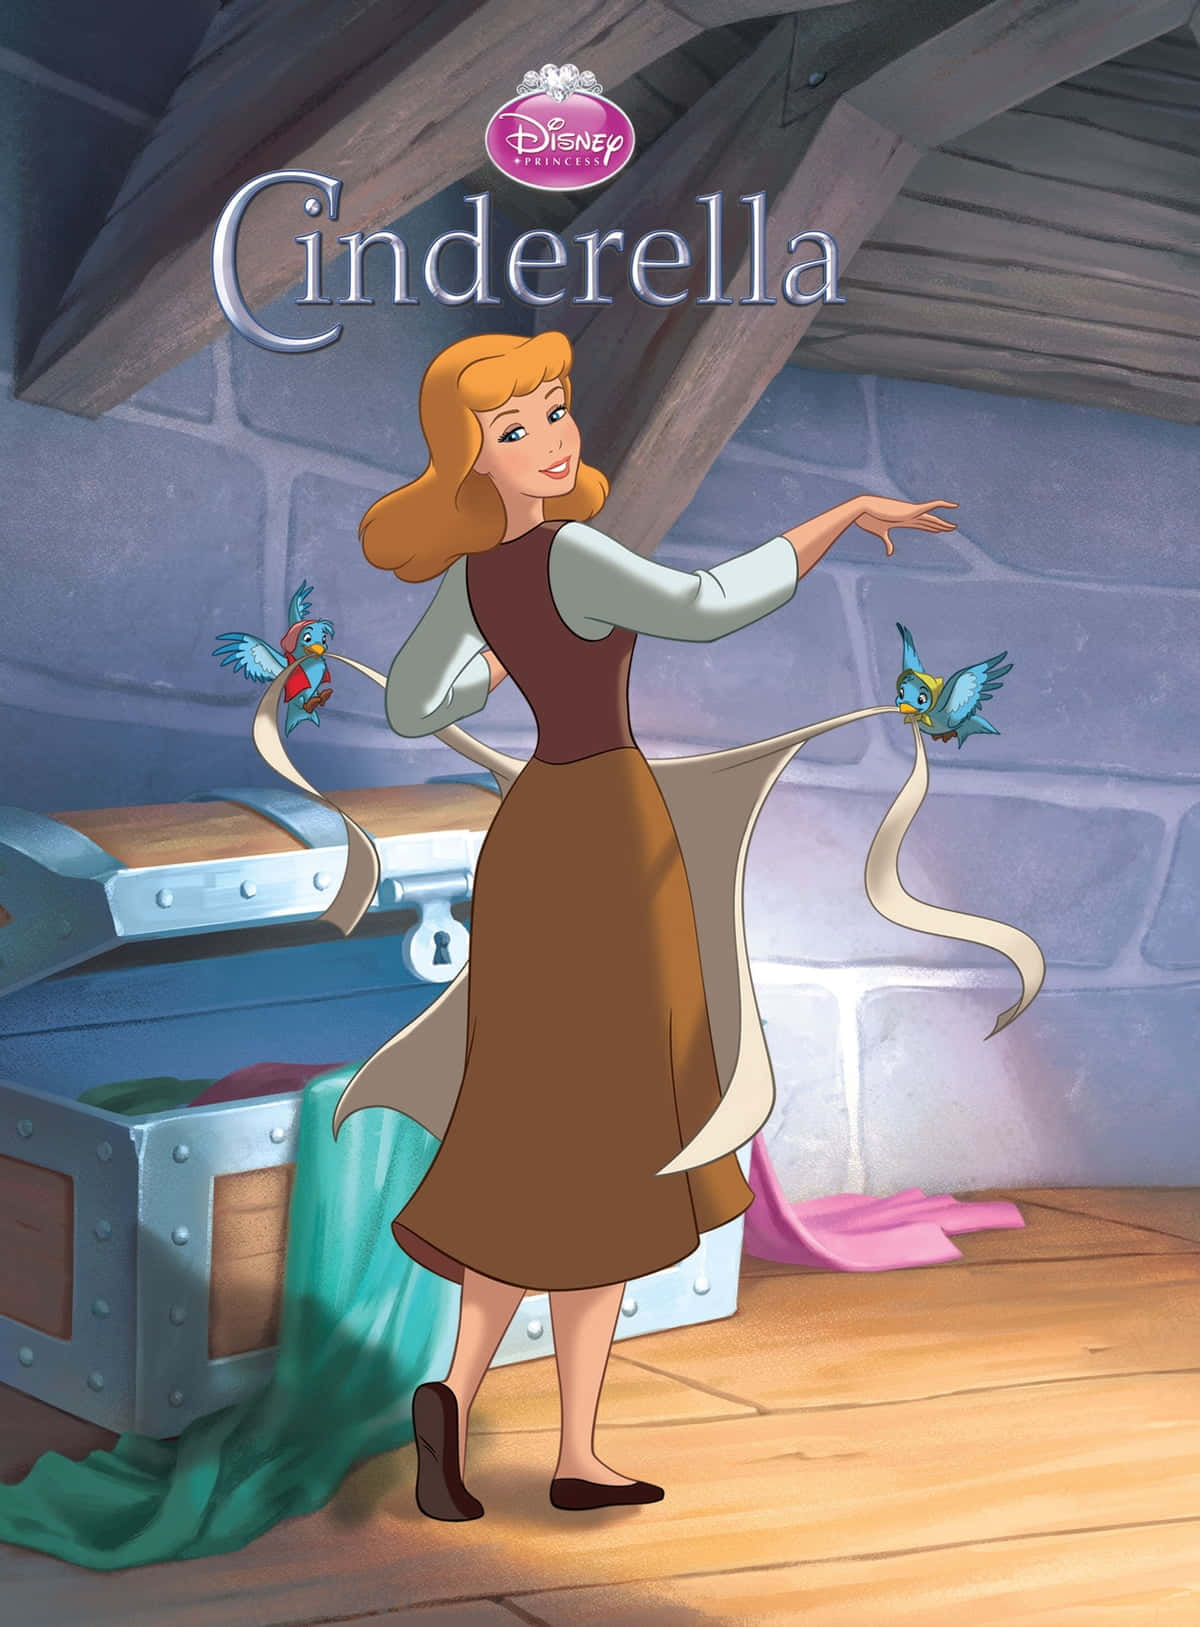 Cinderella facing the challenge of the enchanted pumpkin